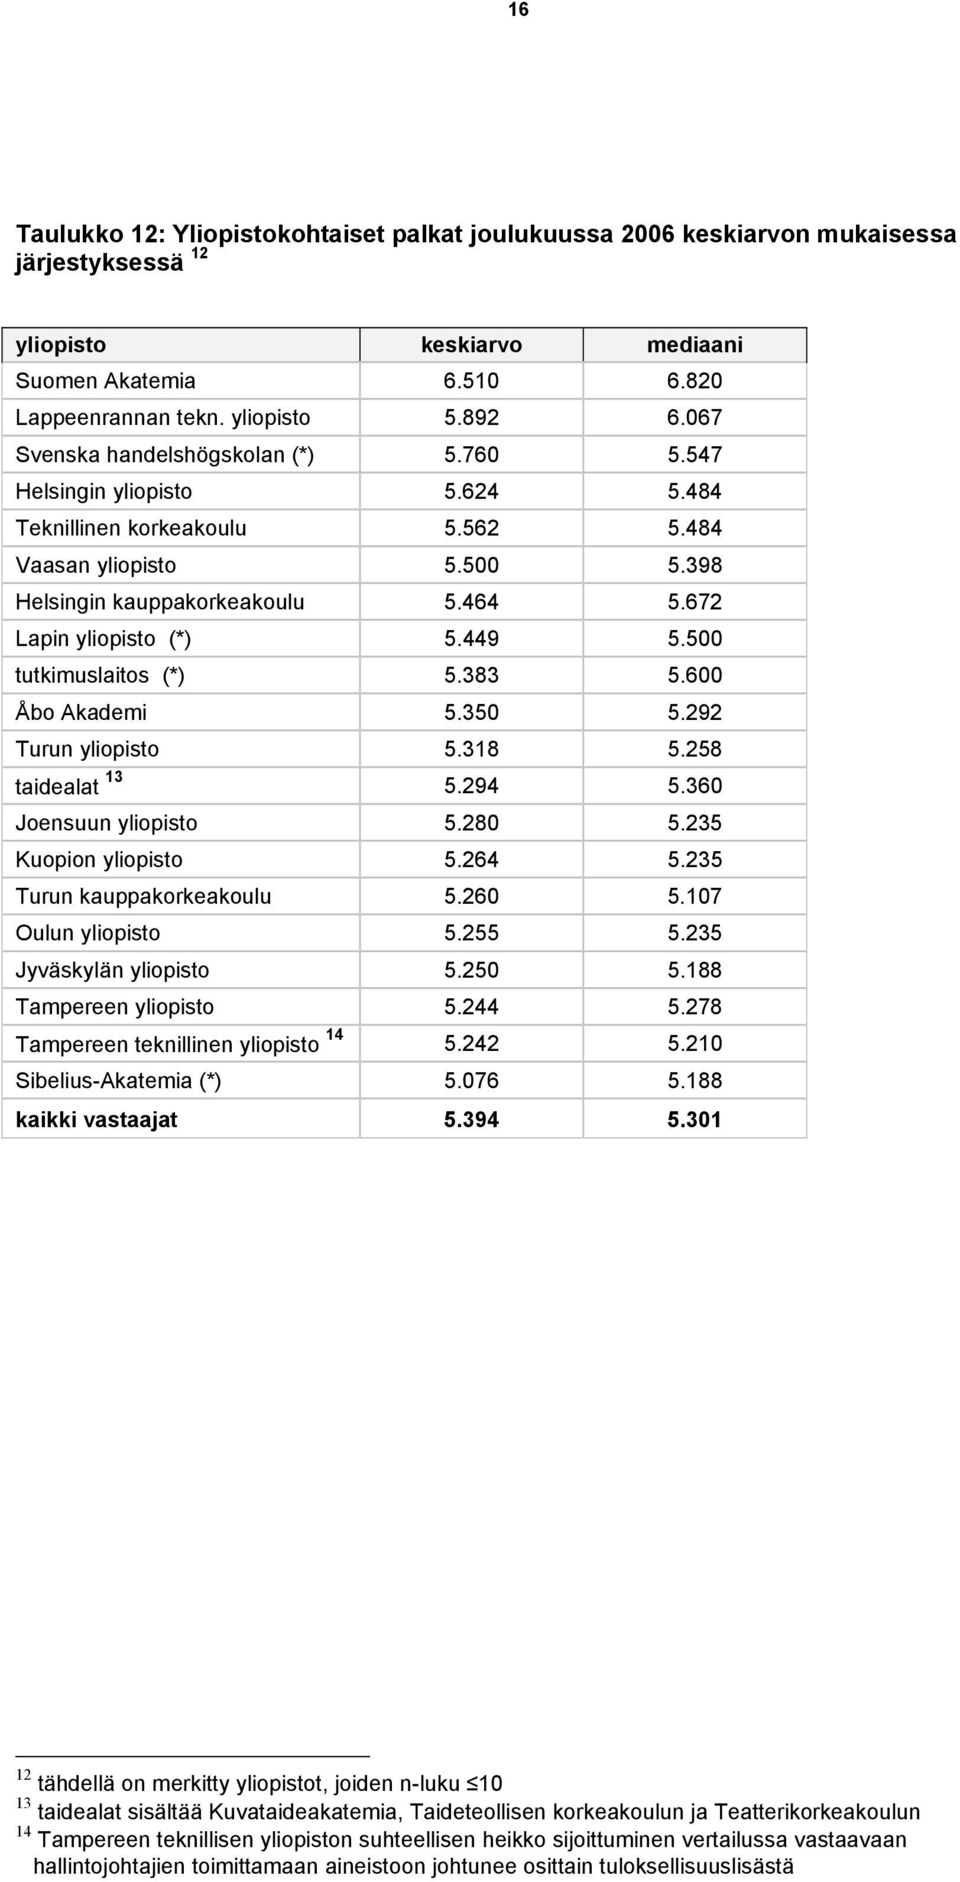 672 Lapin yliopisto (*) 5.449 5.500 tutkimuslaitos (*) 5.383 5.600 Åbo Akademi 5.350 5.292 Turun yliopisto 5.318 5.258 taidealat 13 5.294 5.360 Joensuun yliopisto 5.280 5.235 Kuopion yliopisto 5.